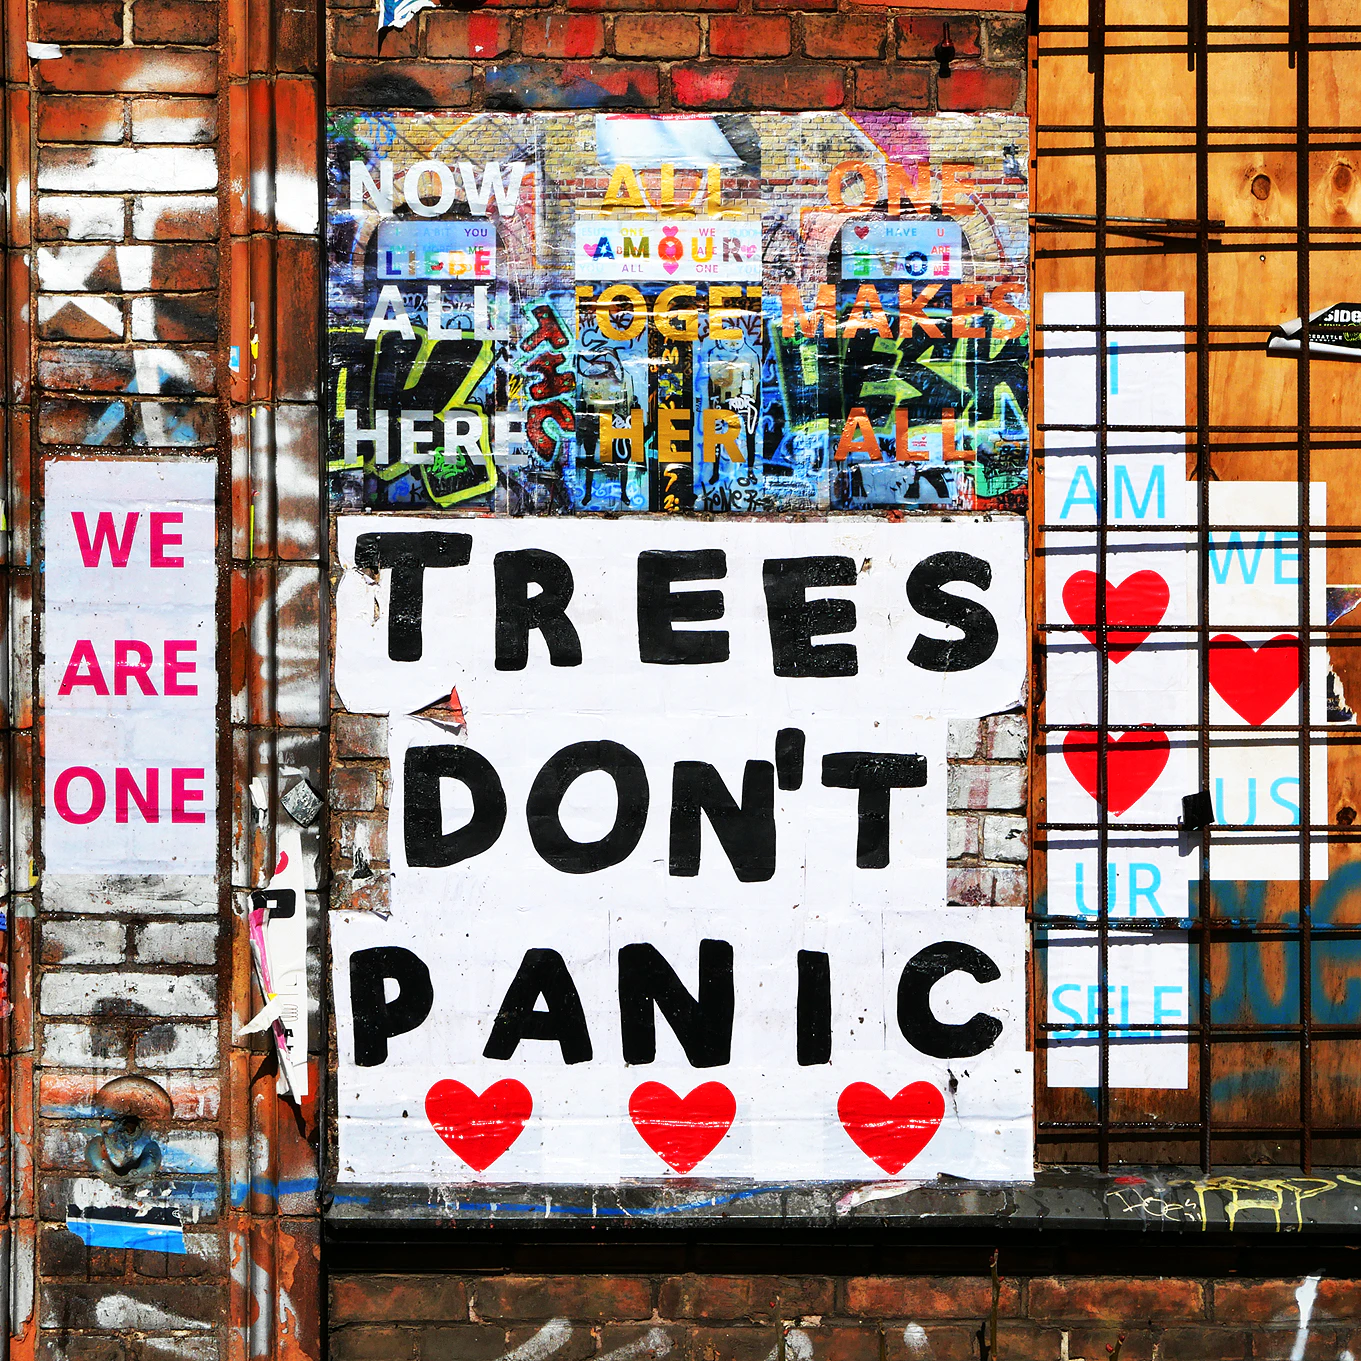 TREES DON'T PANIC | I AM LOVE URSELF